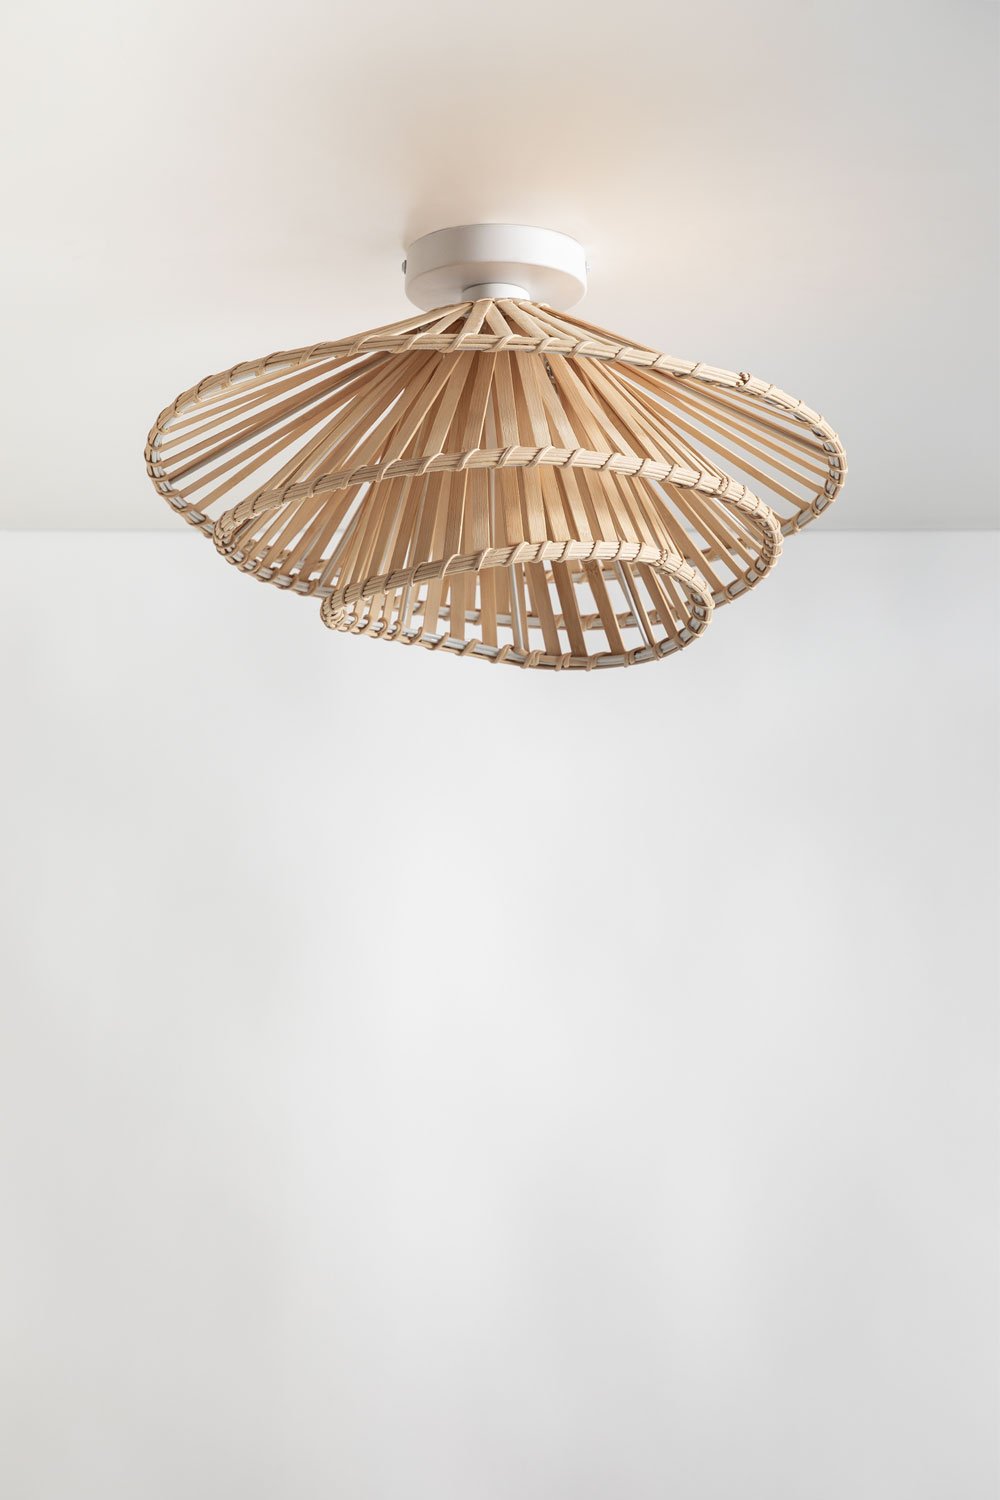 Taroucas bamboo ceiling light, gallery image 1